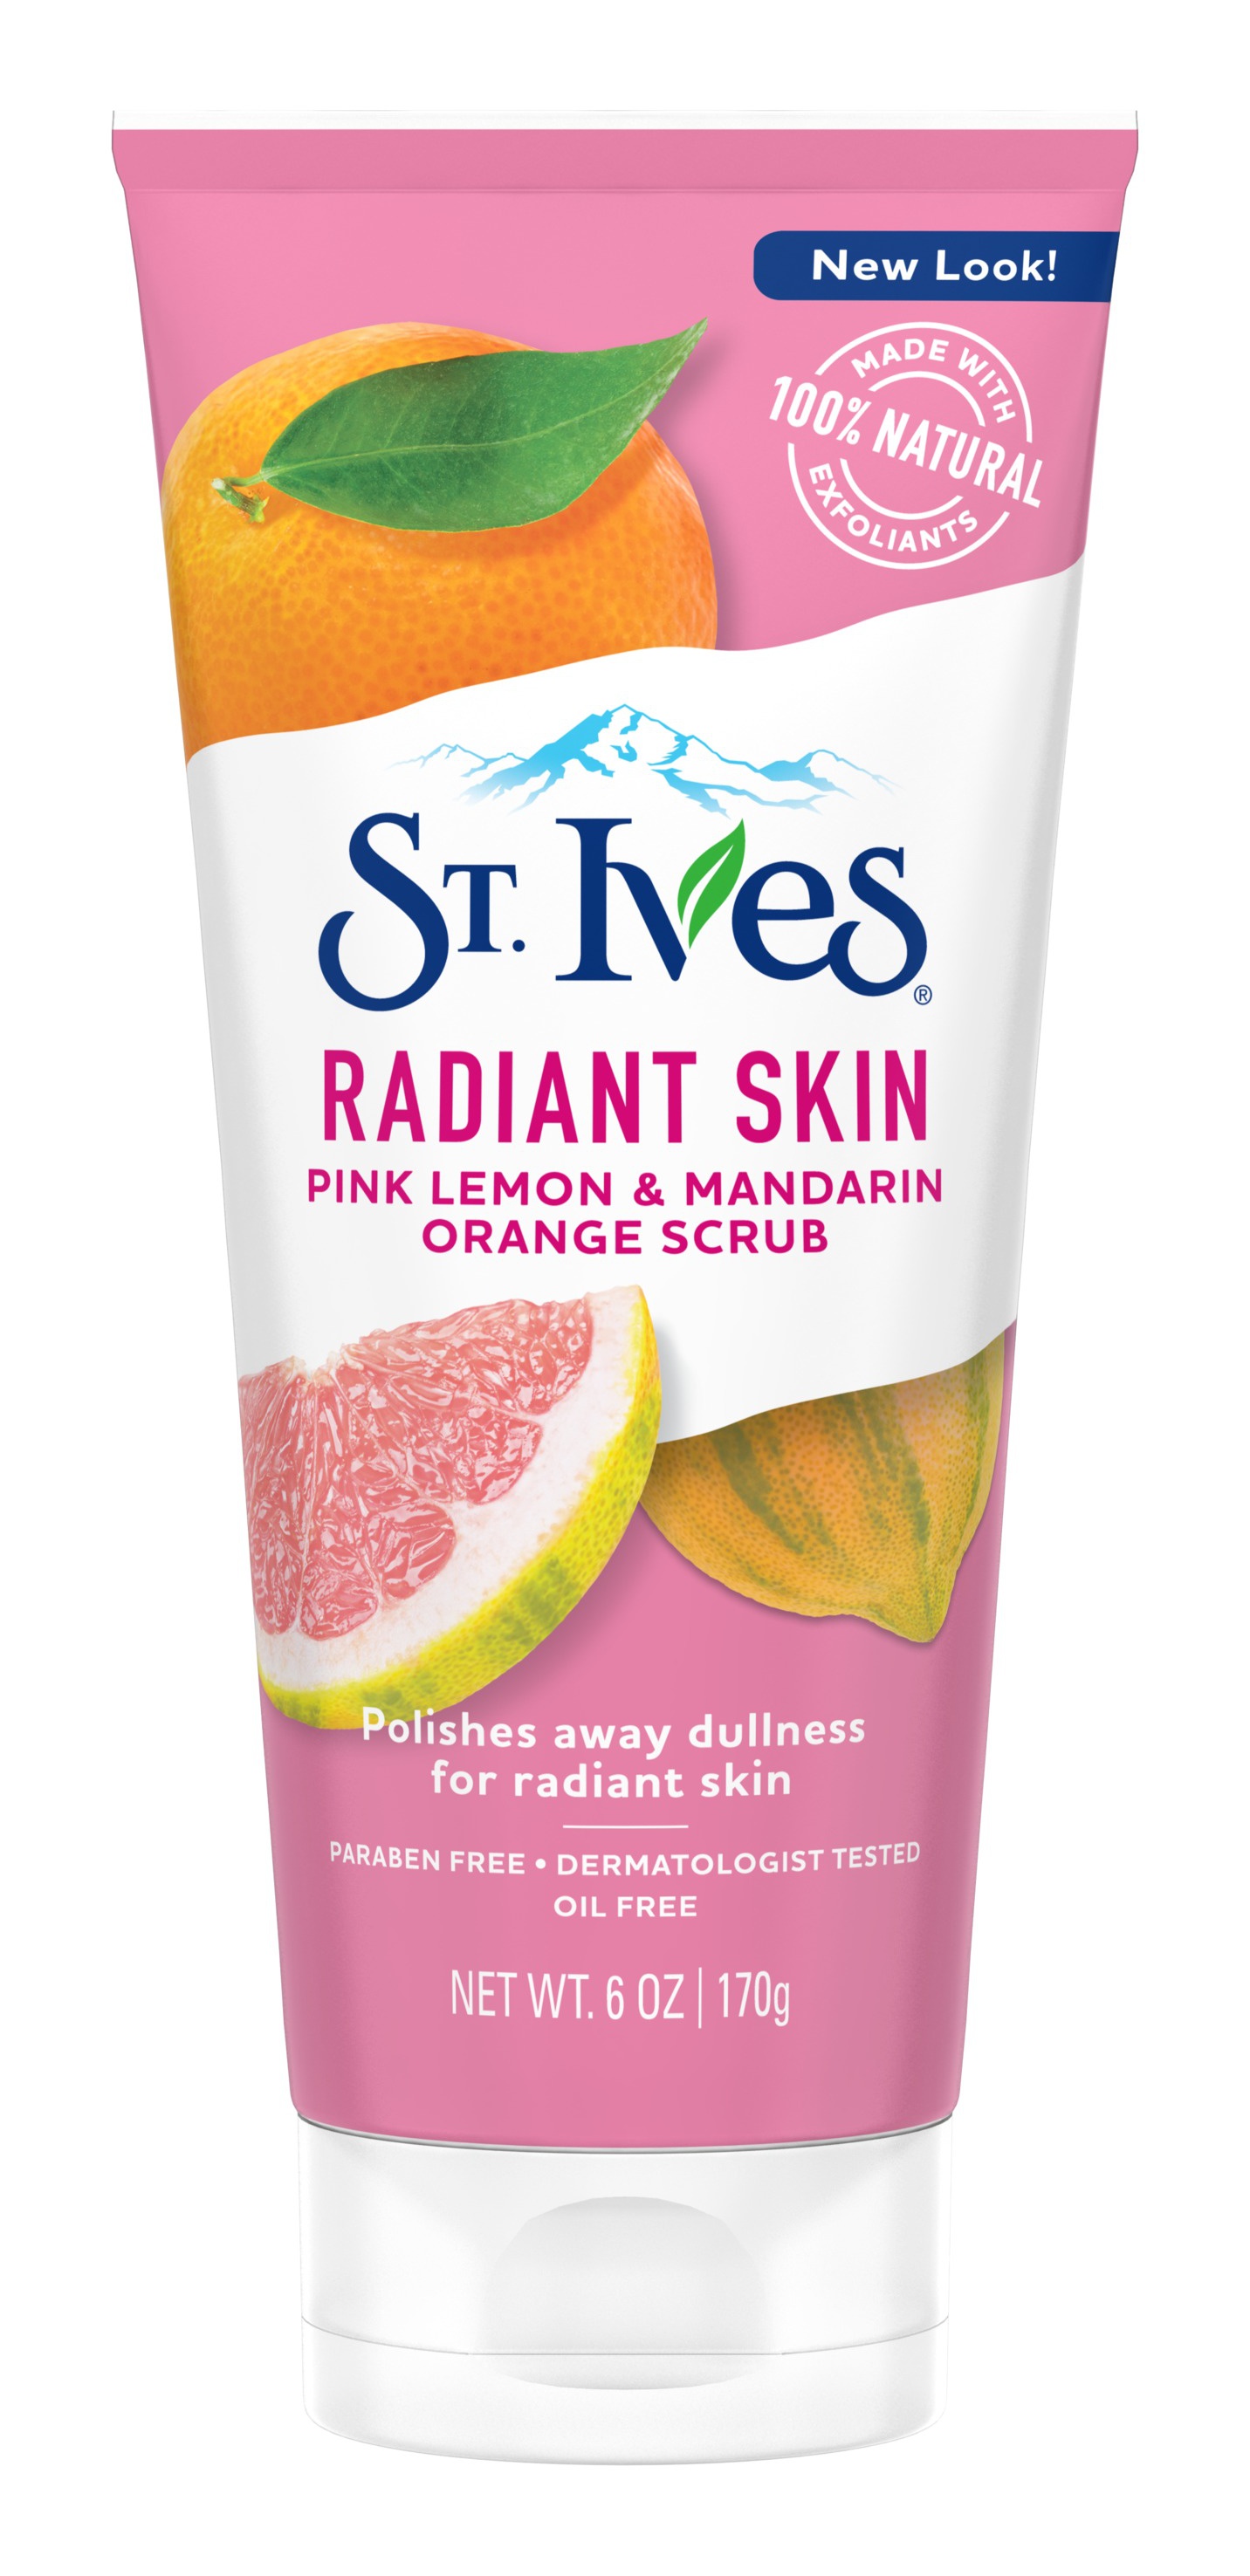 St Ives Radiant Skin Pink Lemon & Mandarin Orange Scrub